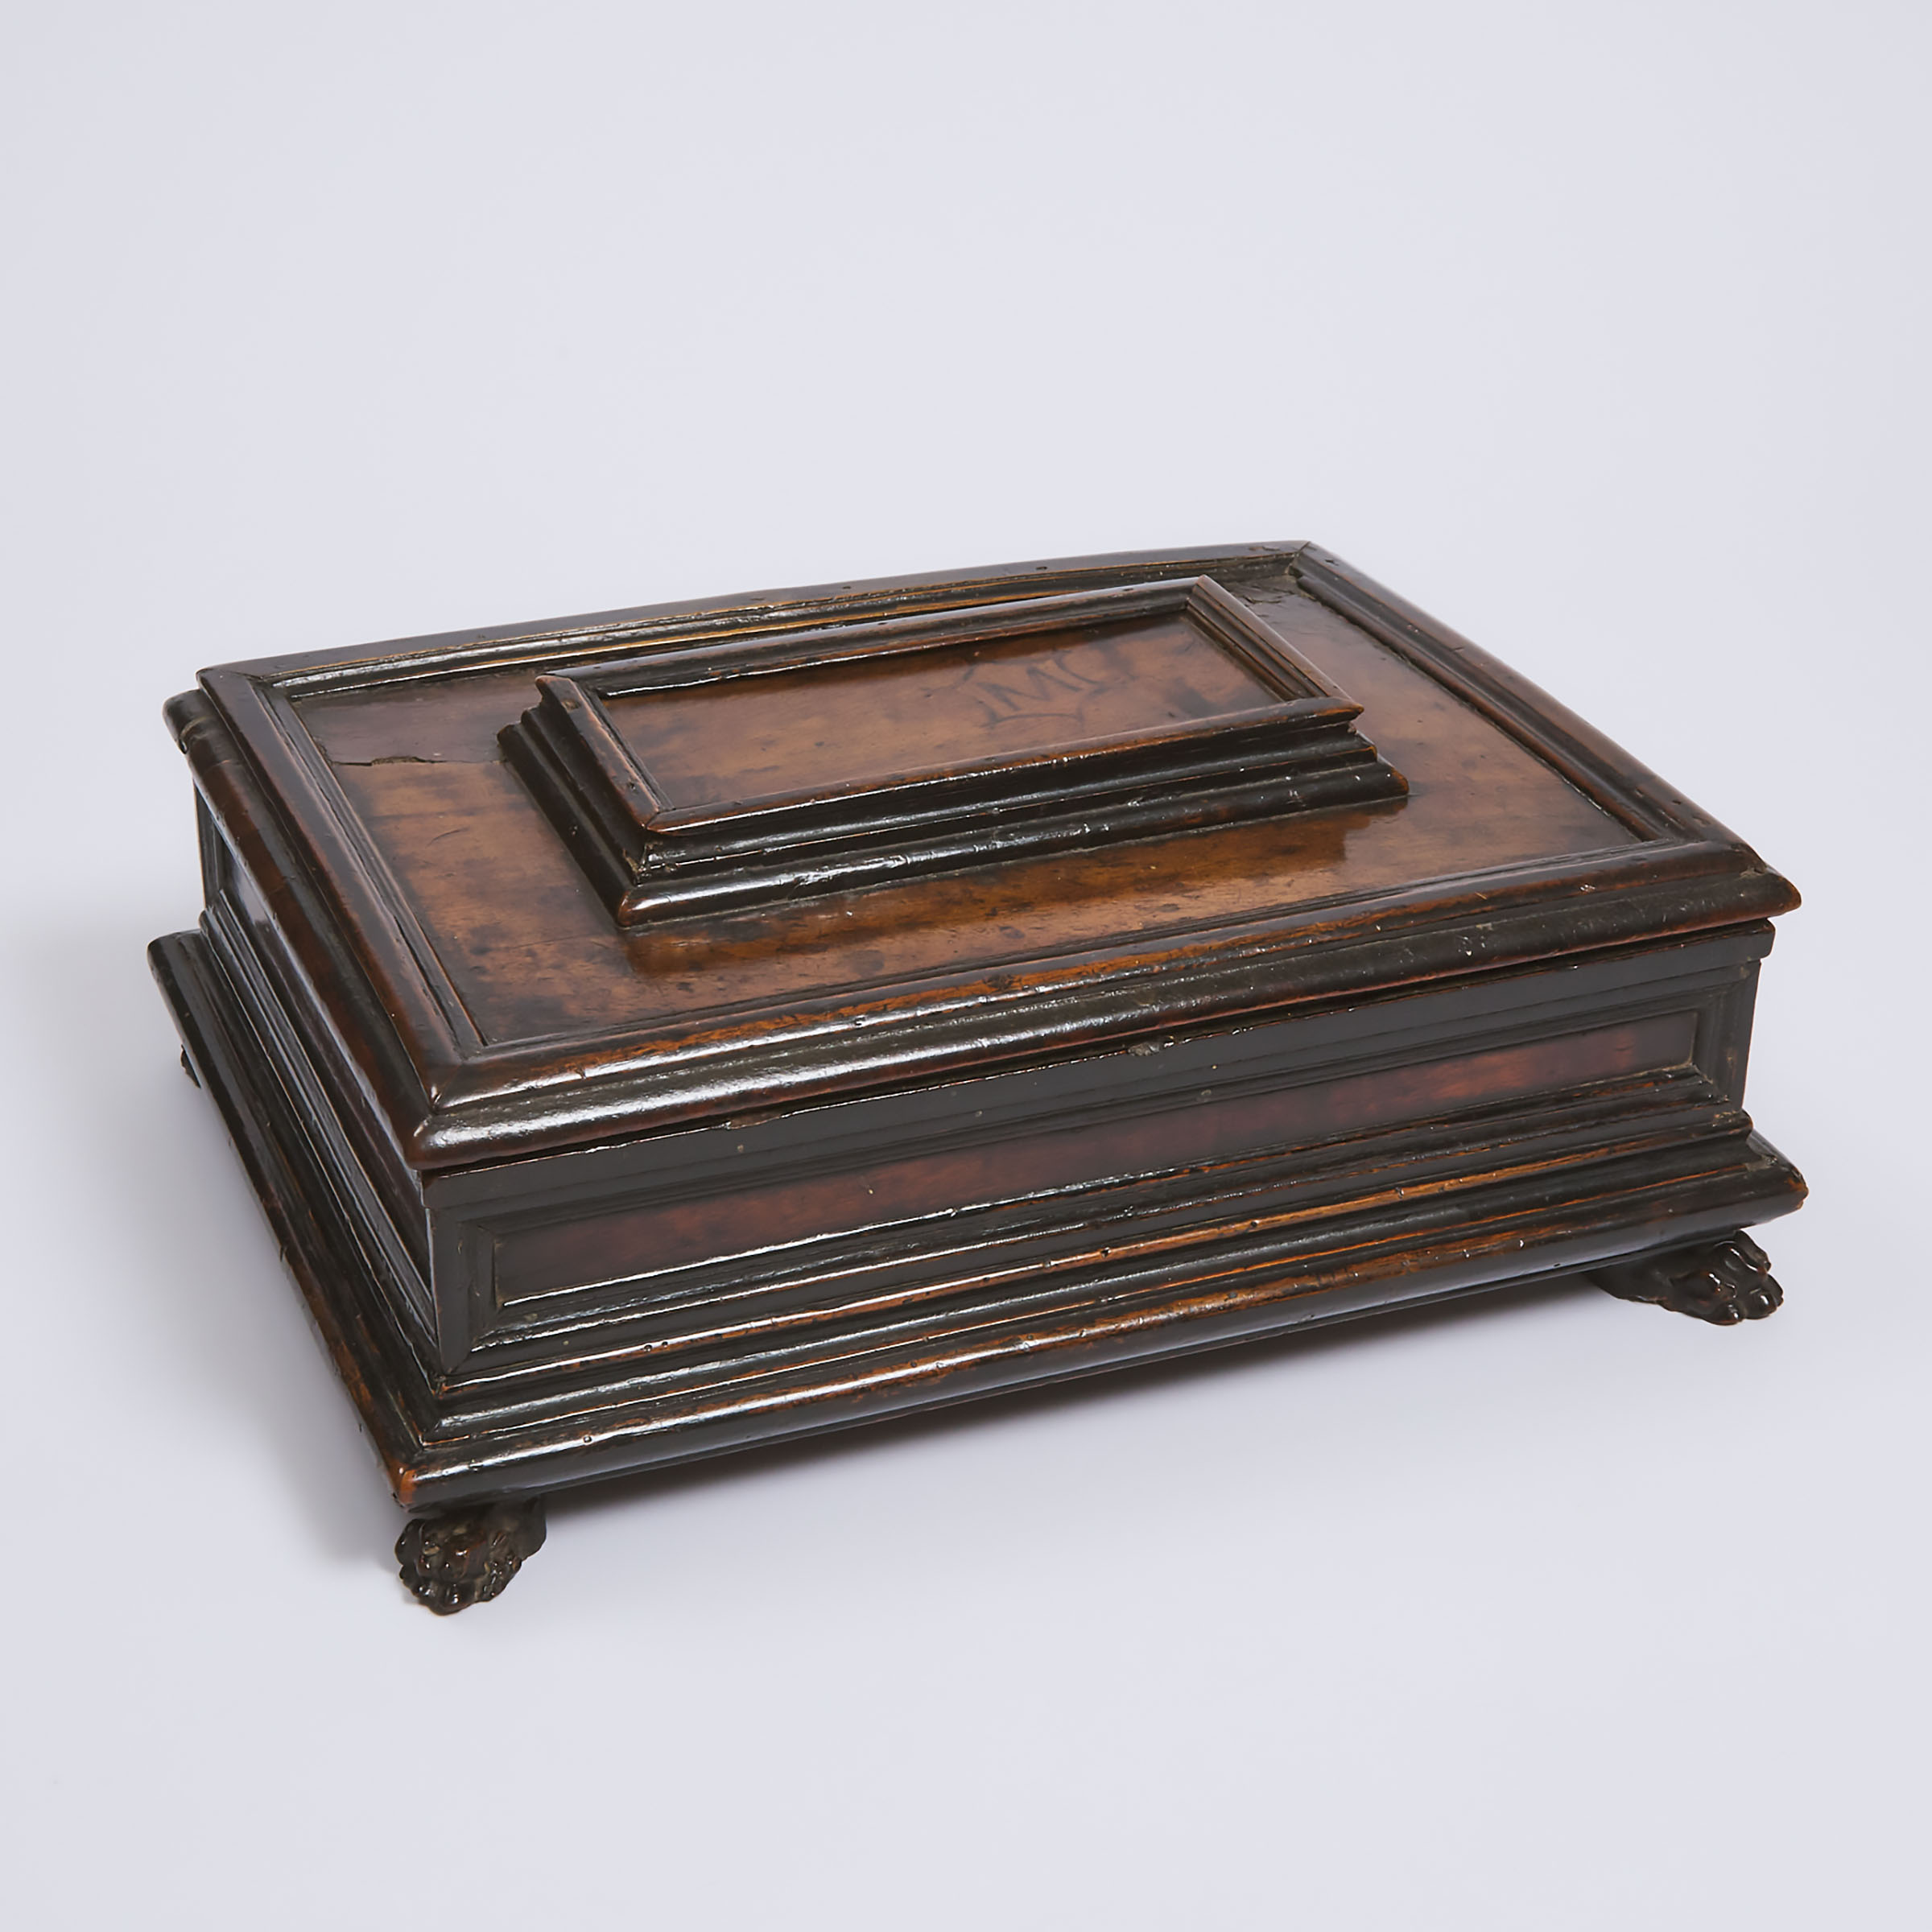 Italian Renaissance Walnut Document Box, 17th or early 18th century